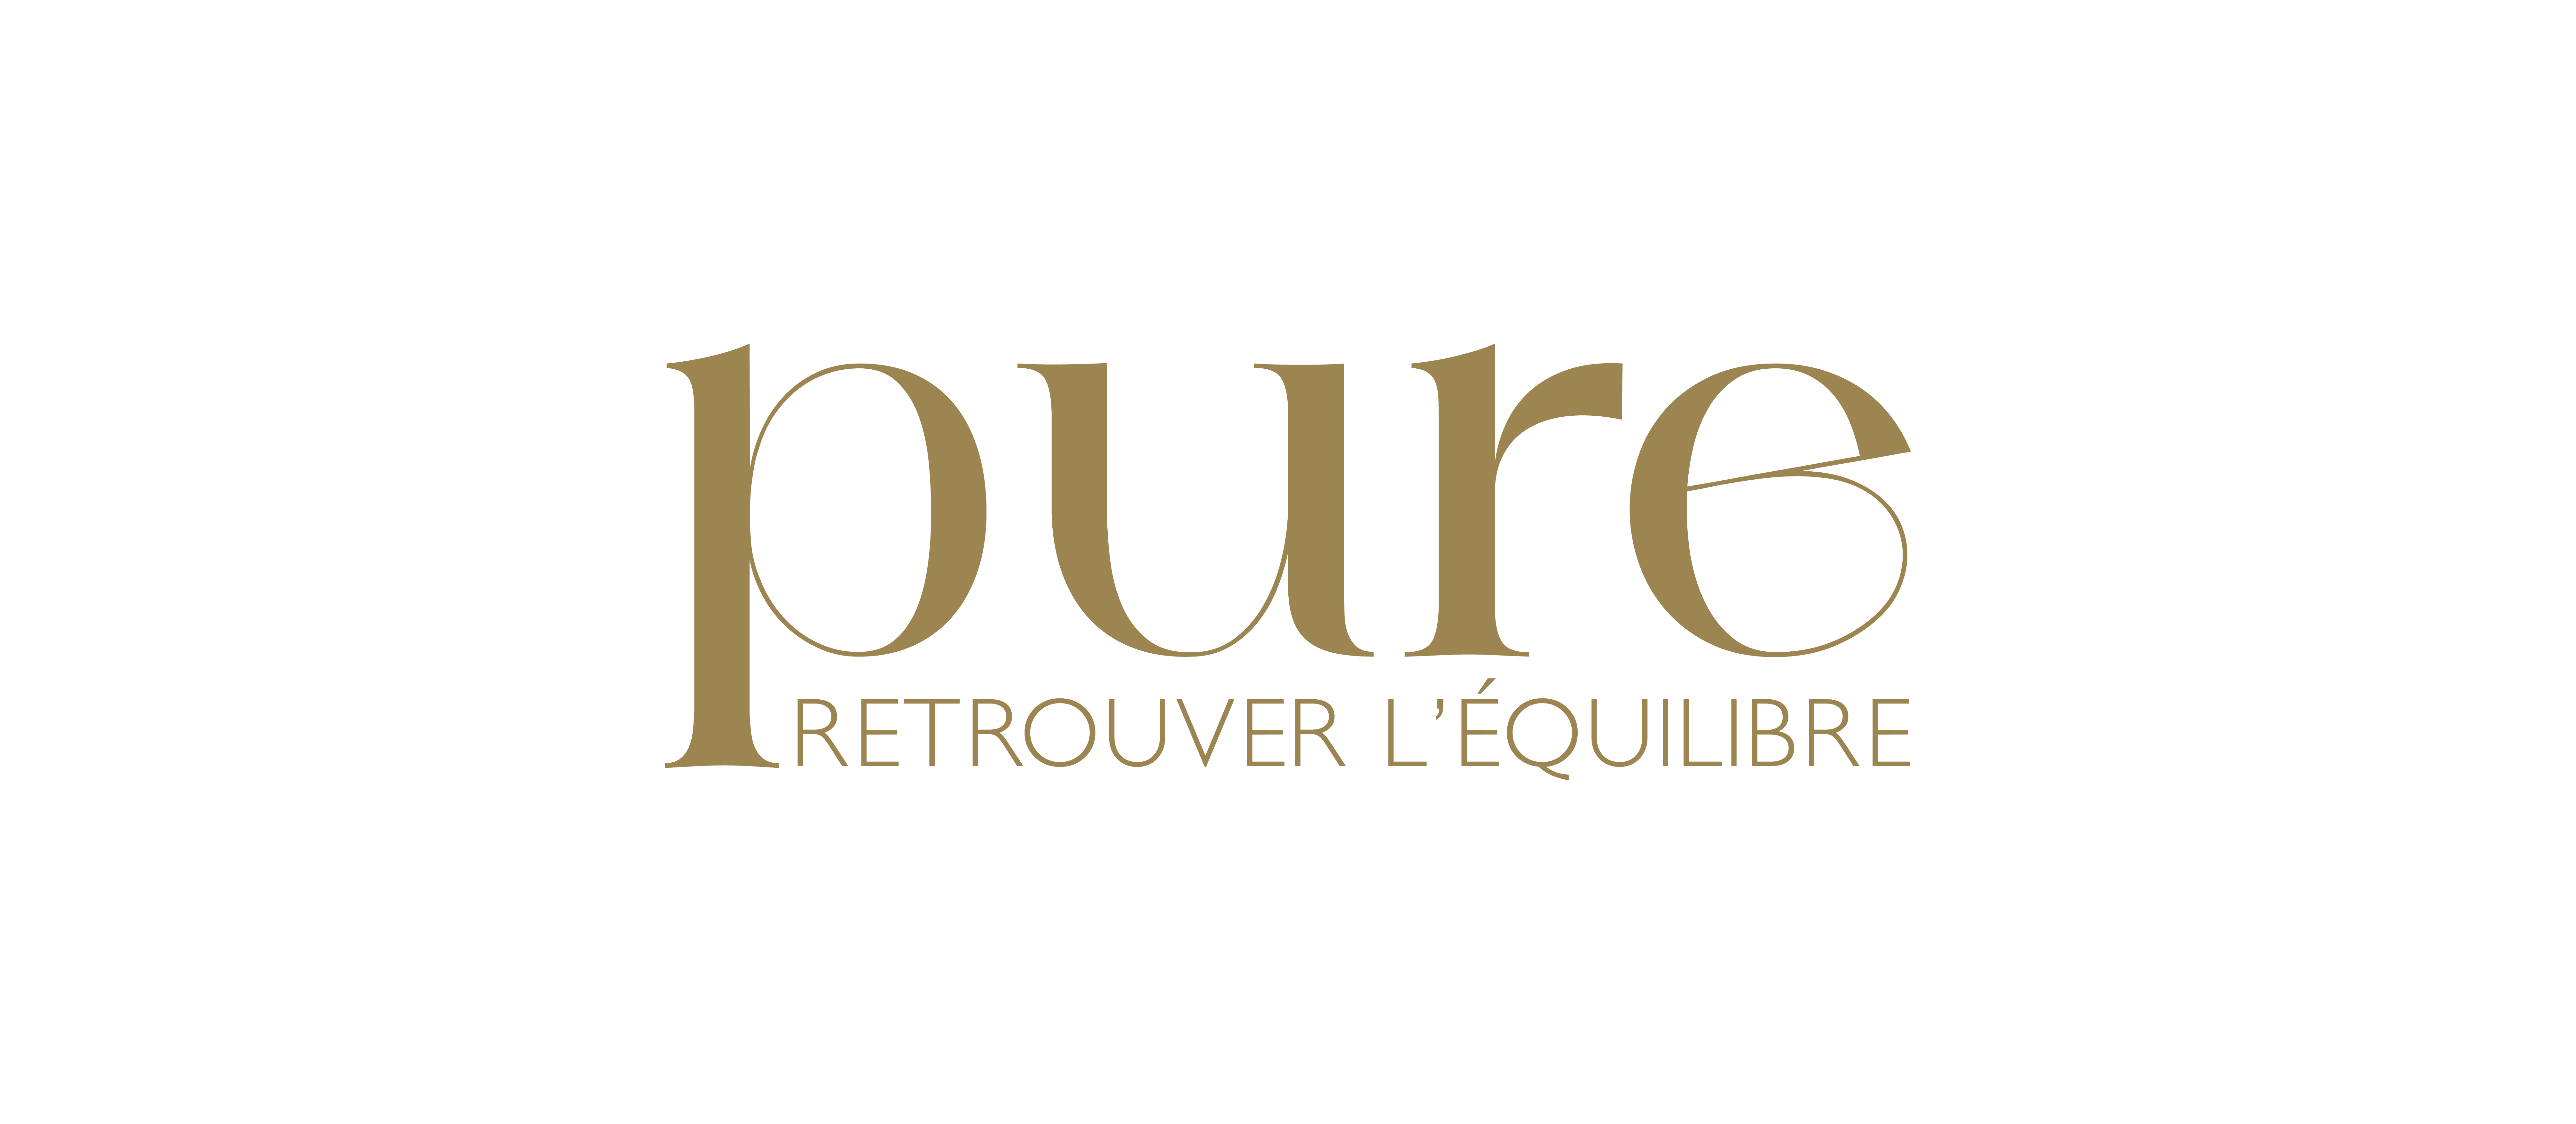 Pure gold logo